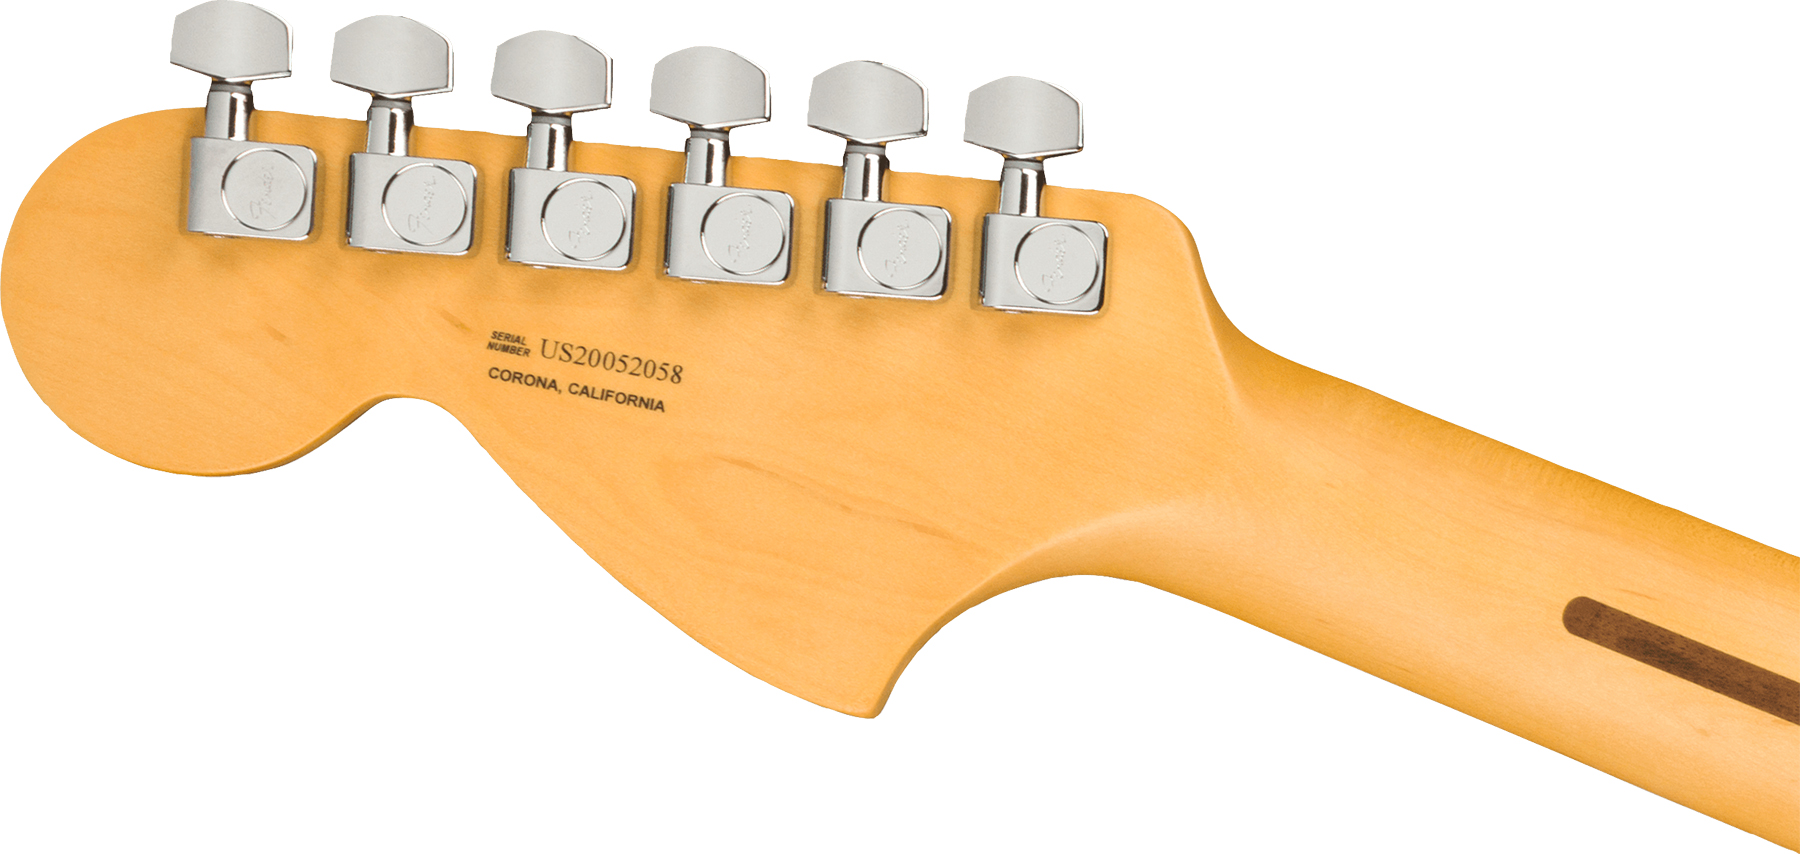 Fender Tele Deluxe American Professional Ii Usa Rw - 3-color Sunburst - Televorm elektrische gitaar - Variation 1